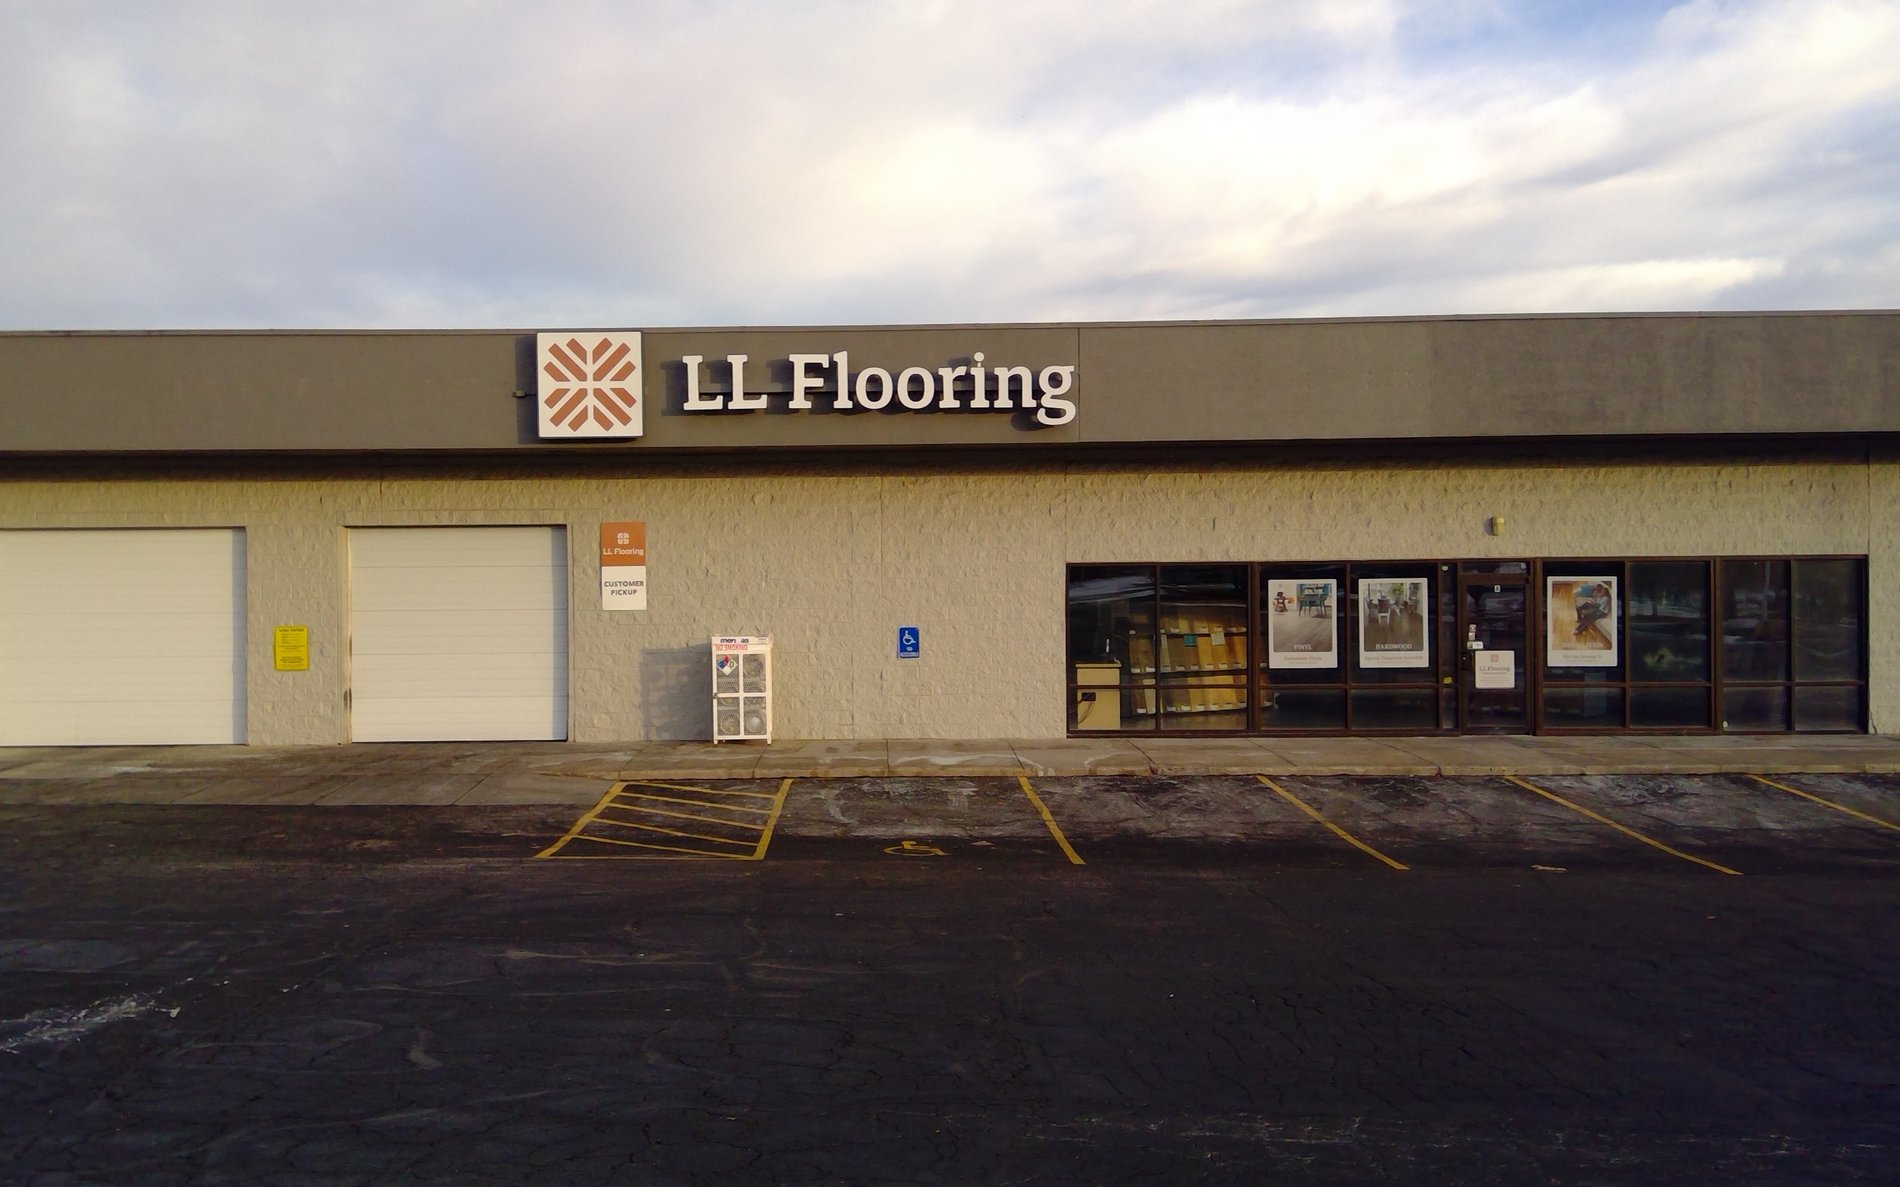 LL Flooring #1185 Lincoln | 6401 Q Street | Storefront